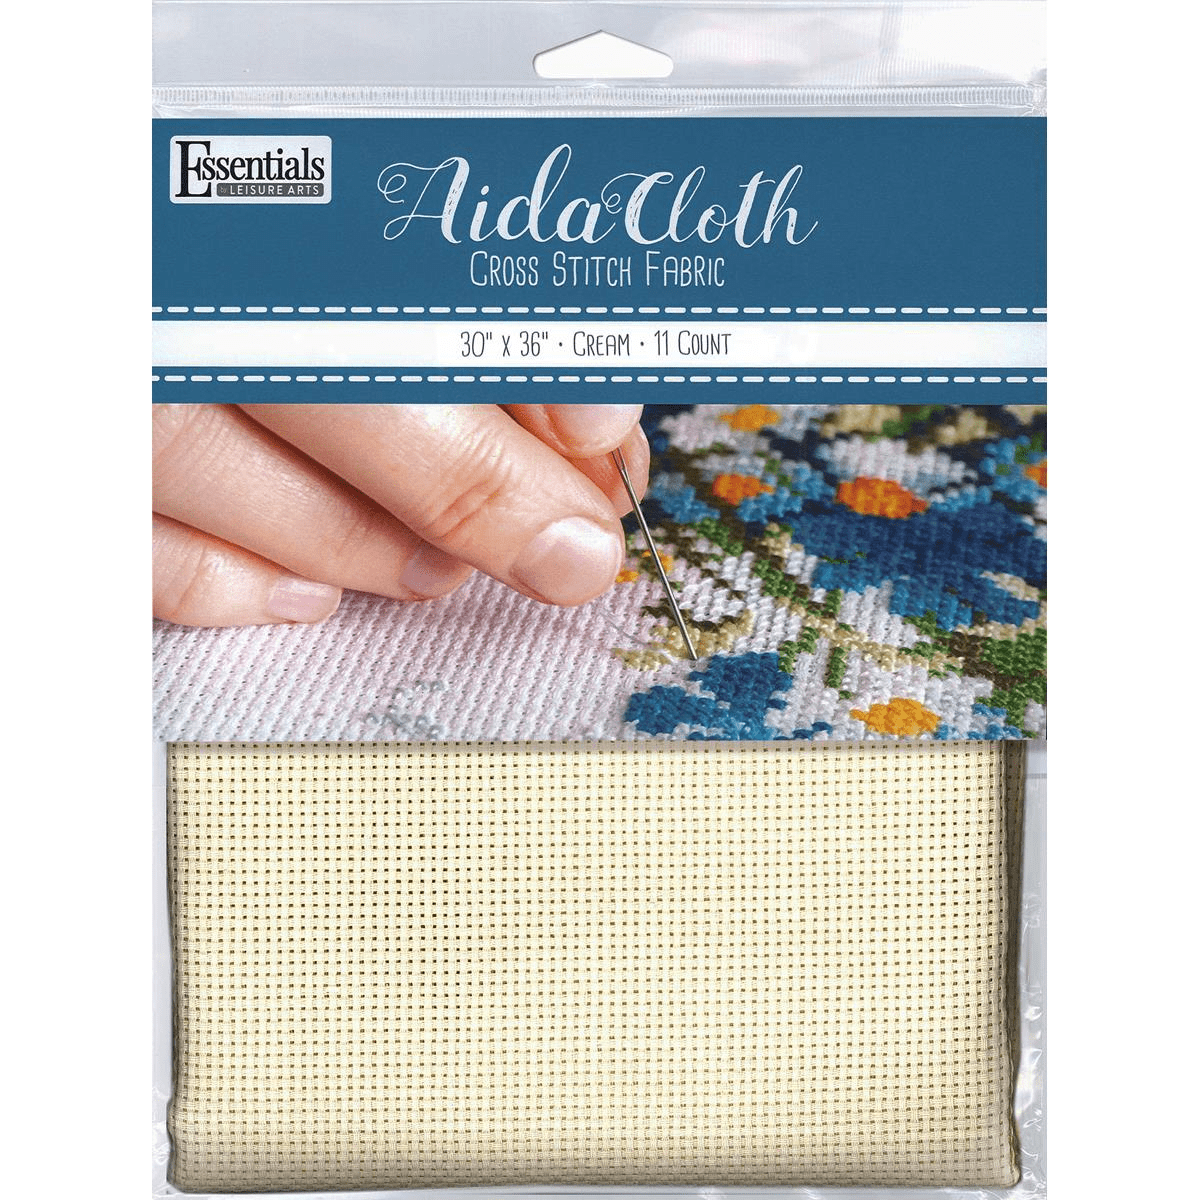 11CT Counted Aida Cloth Cross Stitch Embroidery Fabric, White, 59W x 39L